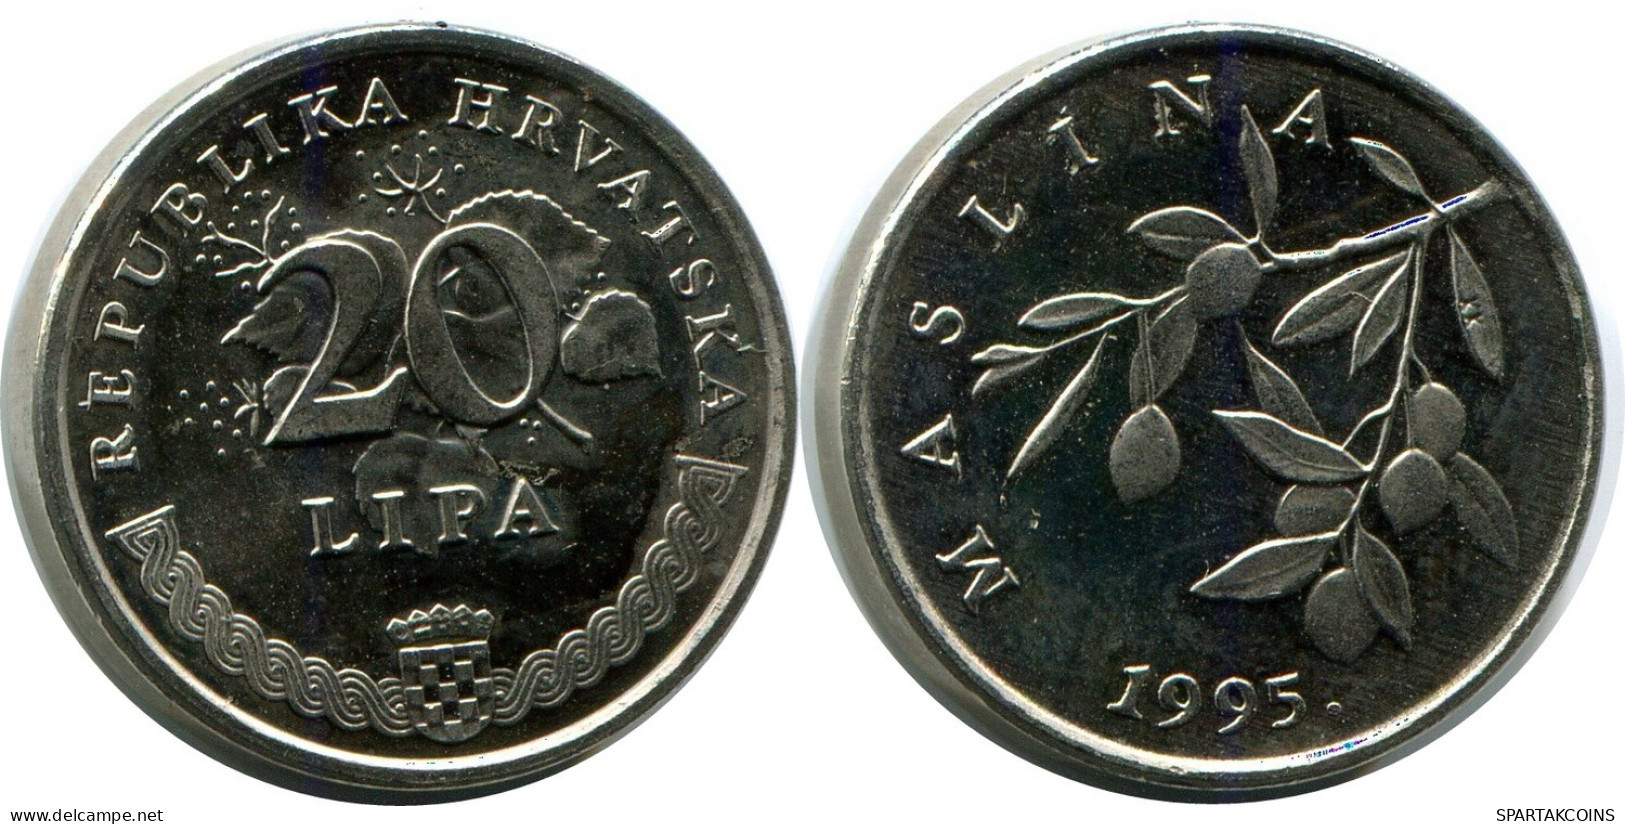 20 LIPA 1995 CROATIA Coin #AR930.U.A - Croacia